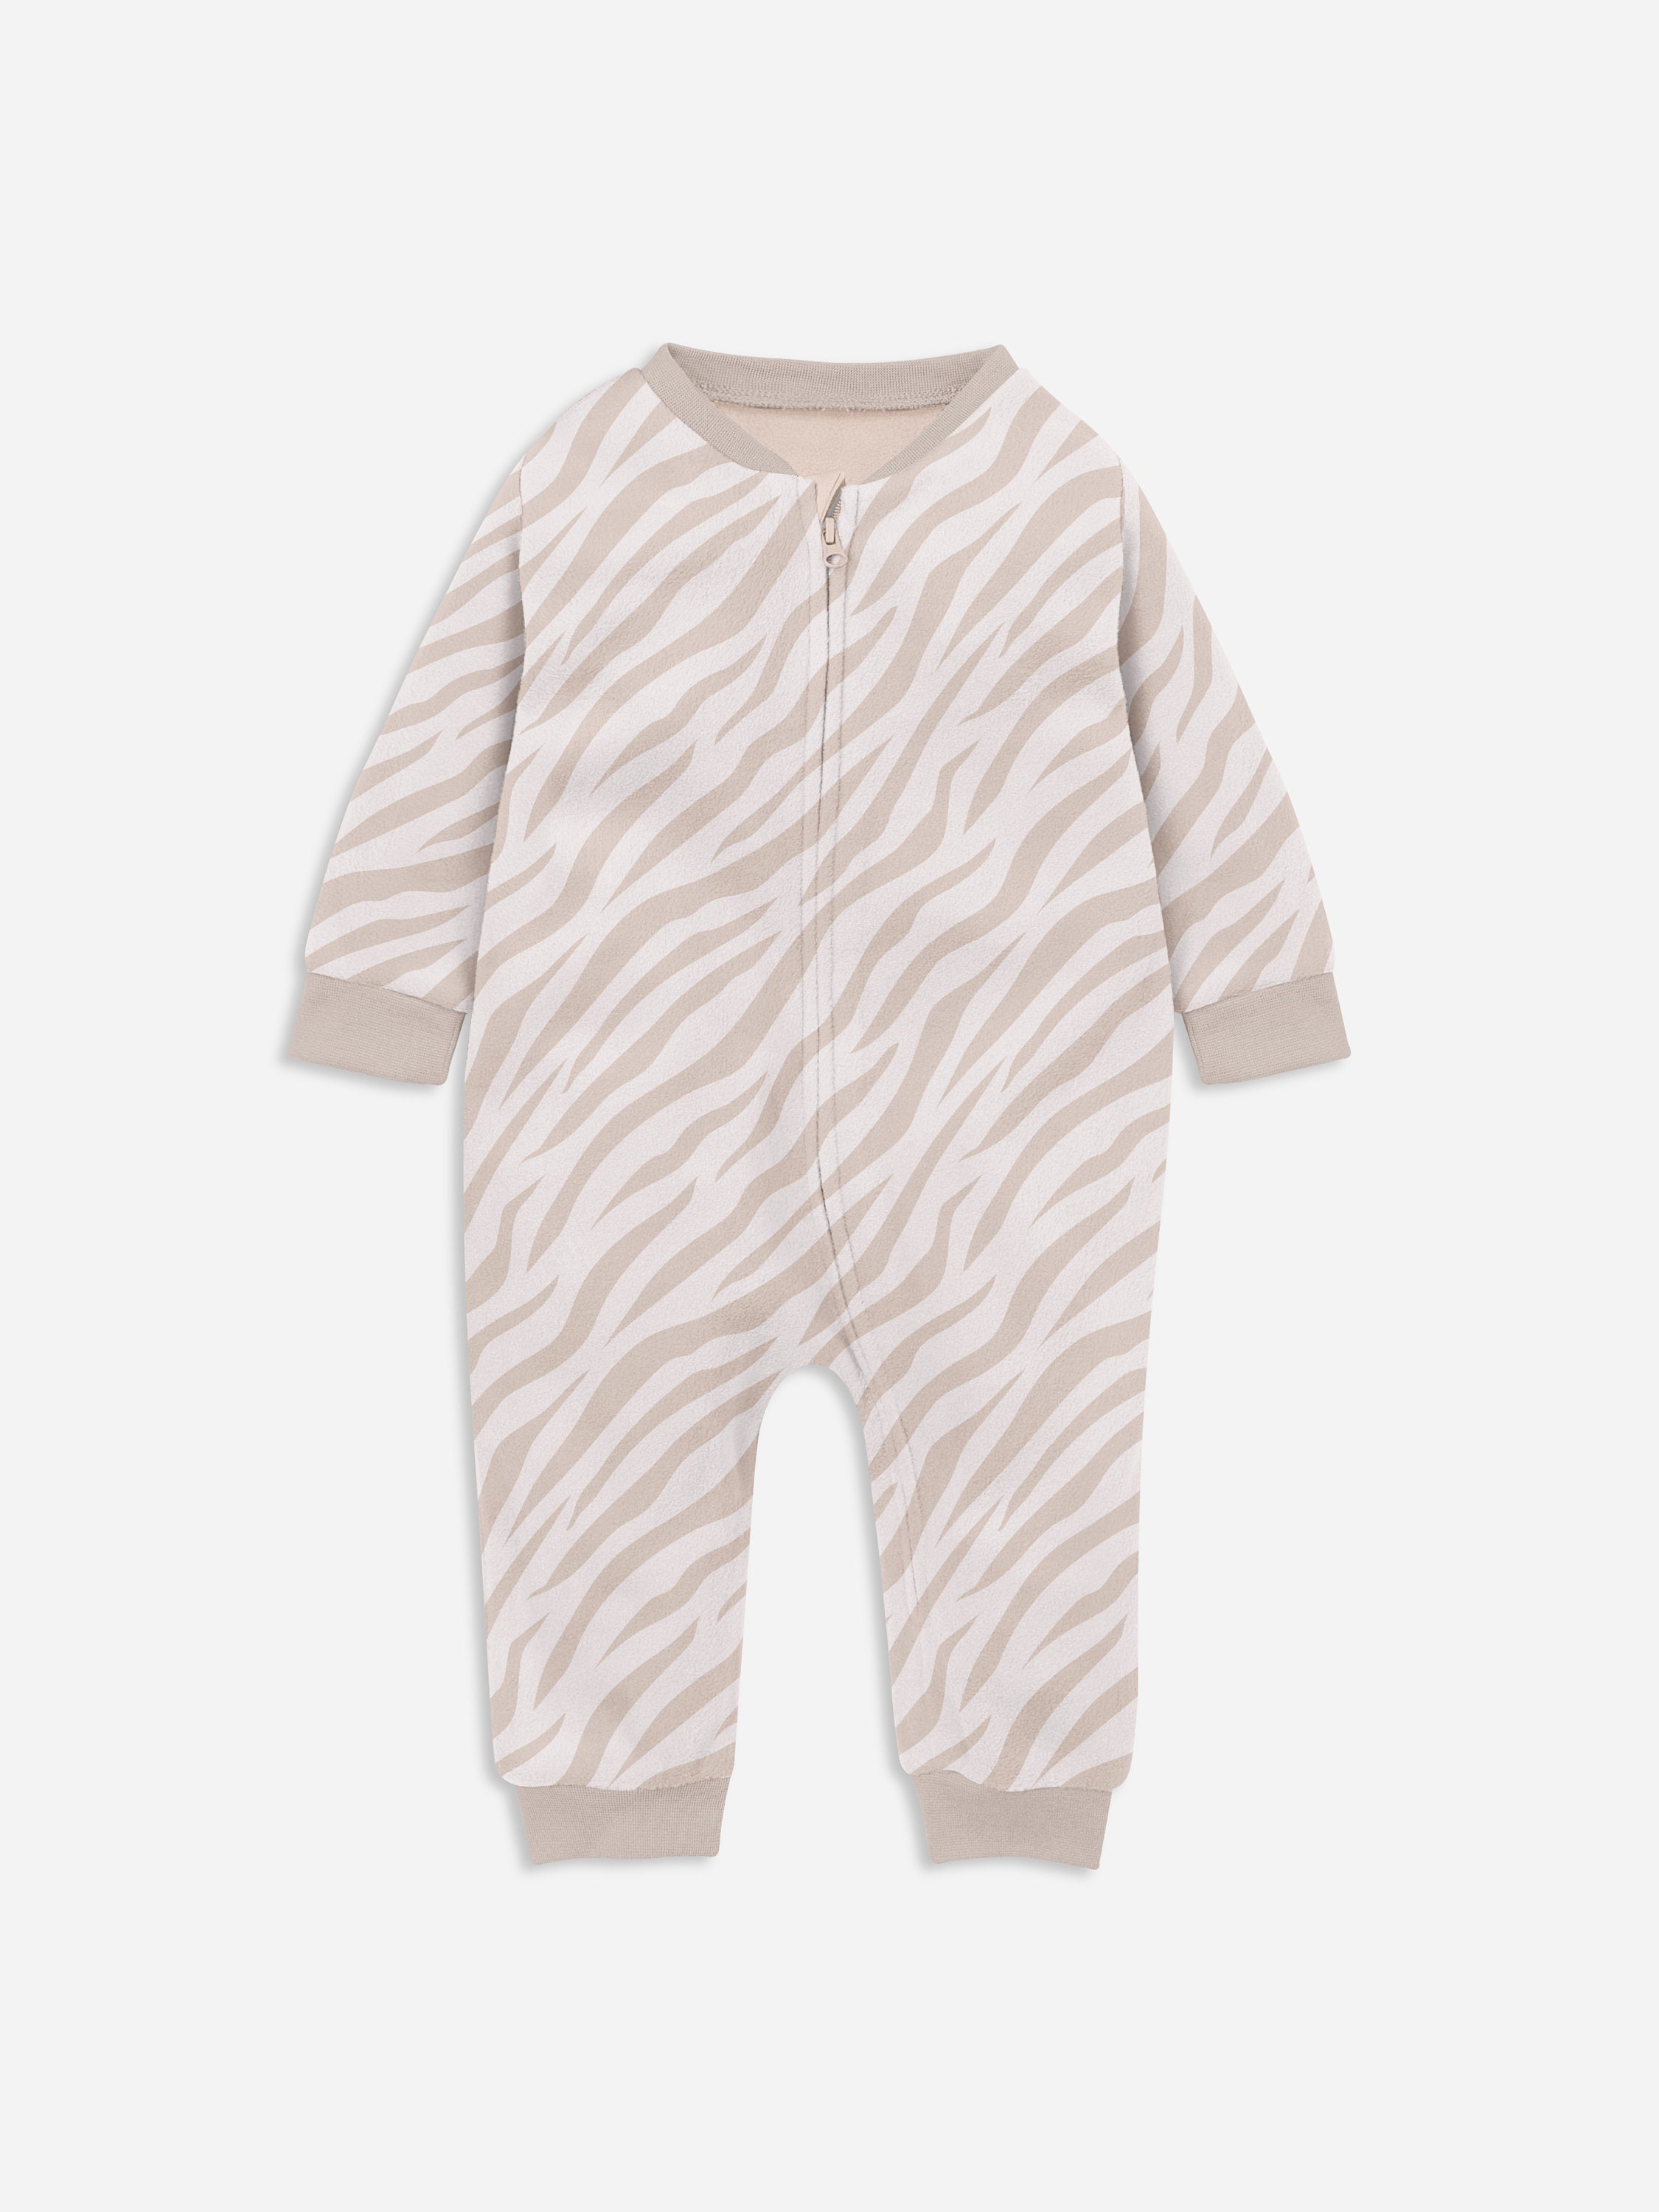 Zebra Pattern Zebra Fabric Design Beige and Cream Texture - Etsy